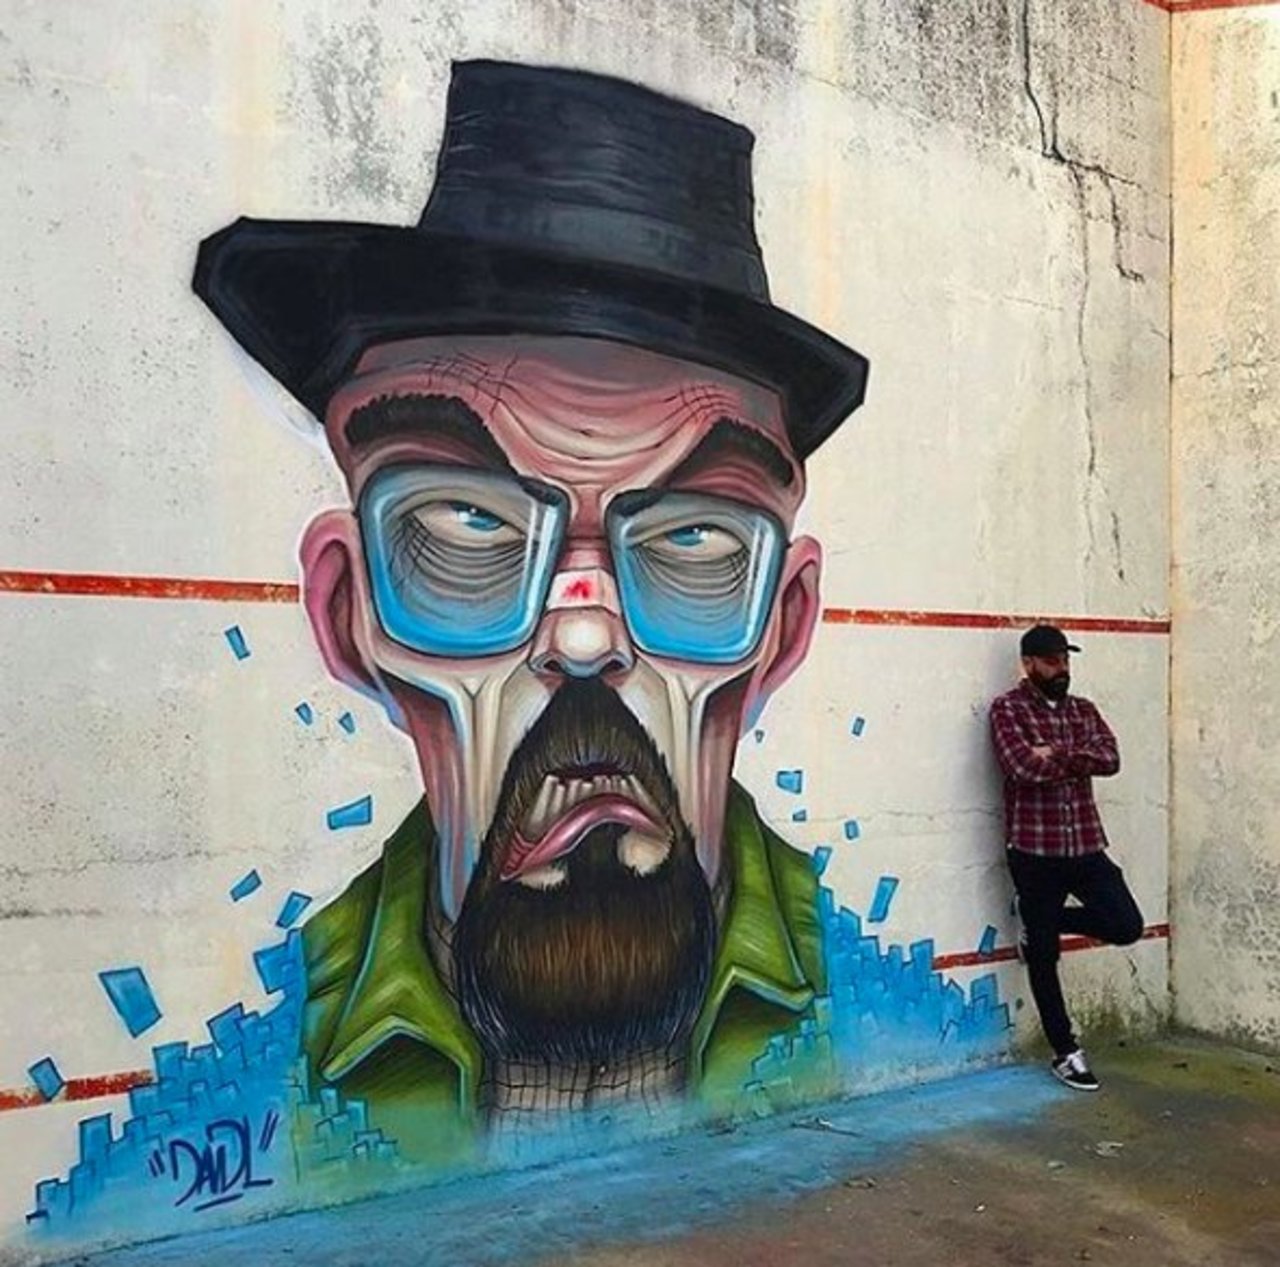 An awesome portrait of Heisenberg in #Spain by #DavidL! -- #globalstreetart #streetart #art #graffiti https://t.co/SrChOeaPvN